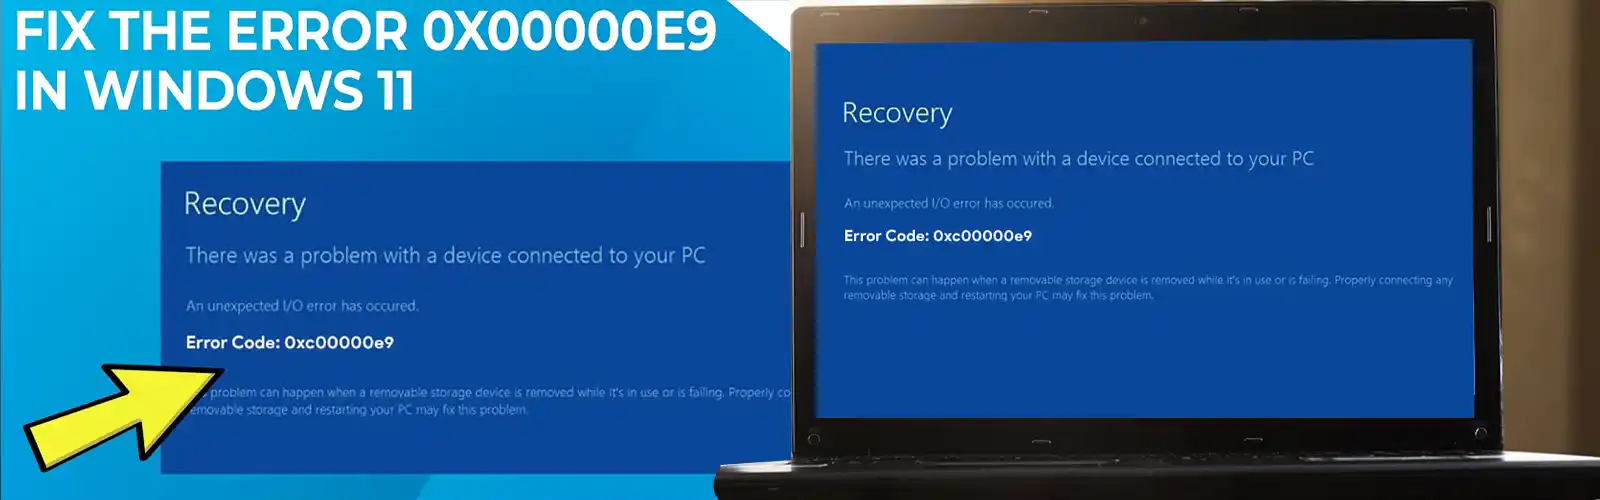 How to Fix Error Code 0xc00000e9 Windows 10